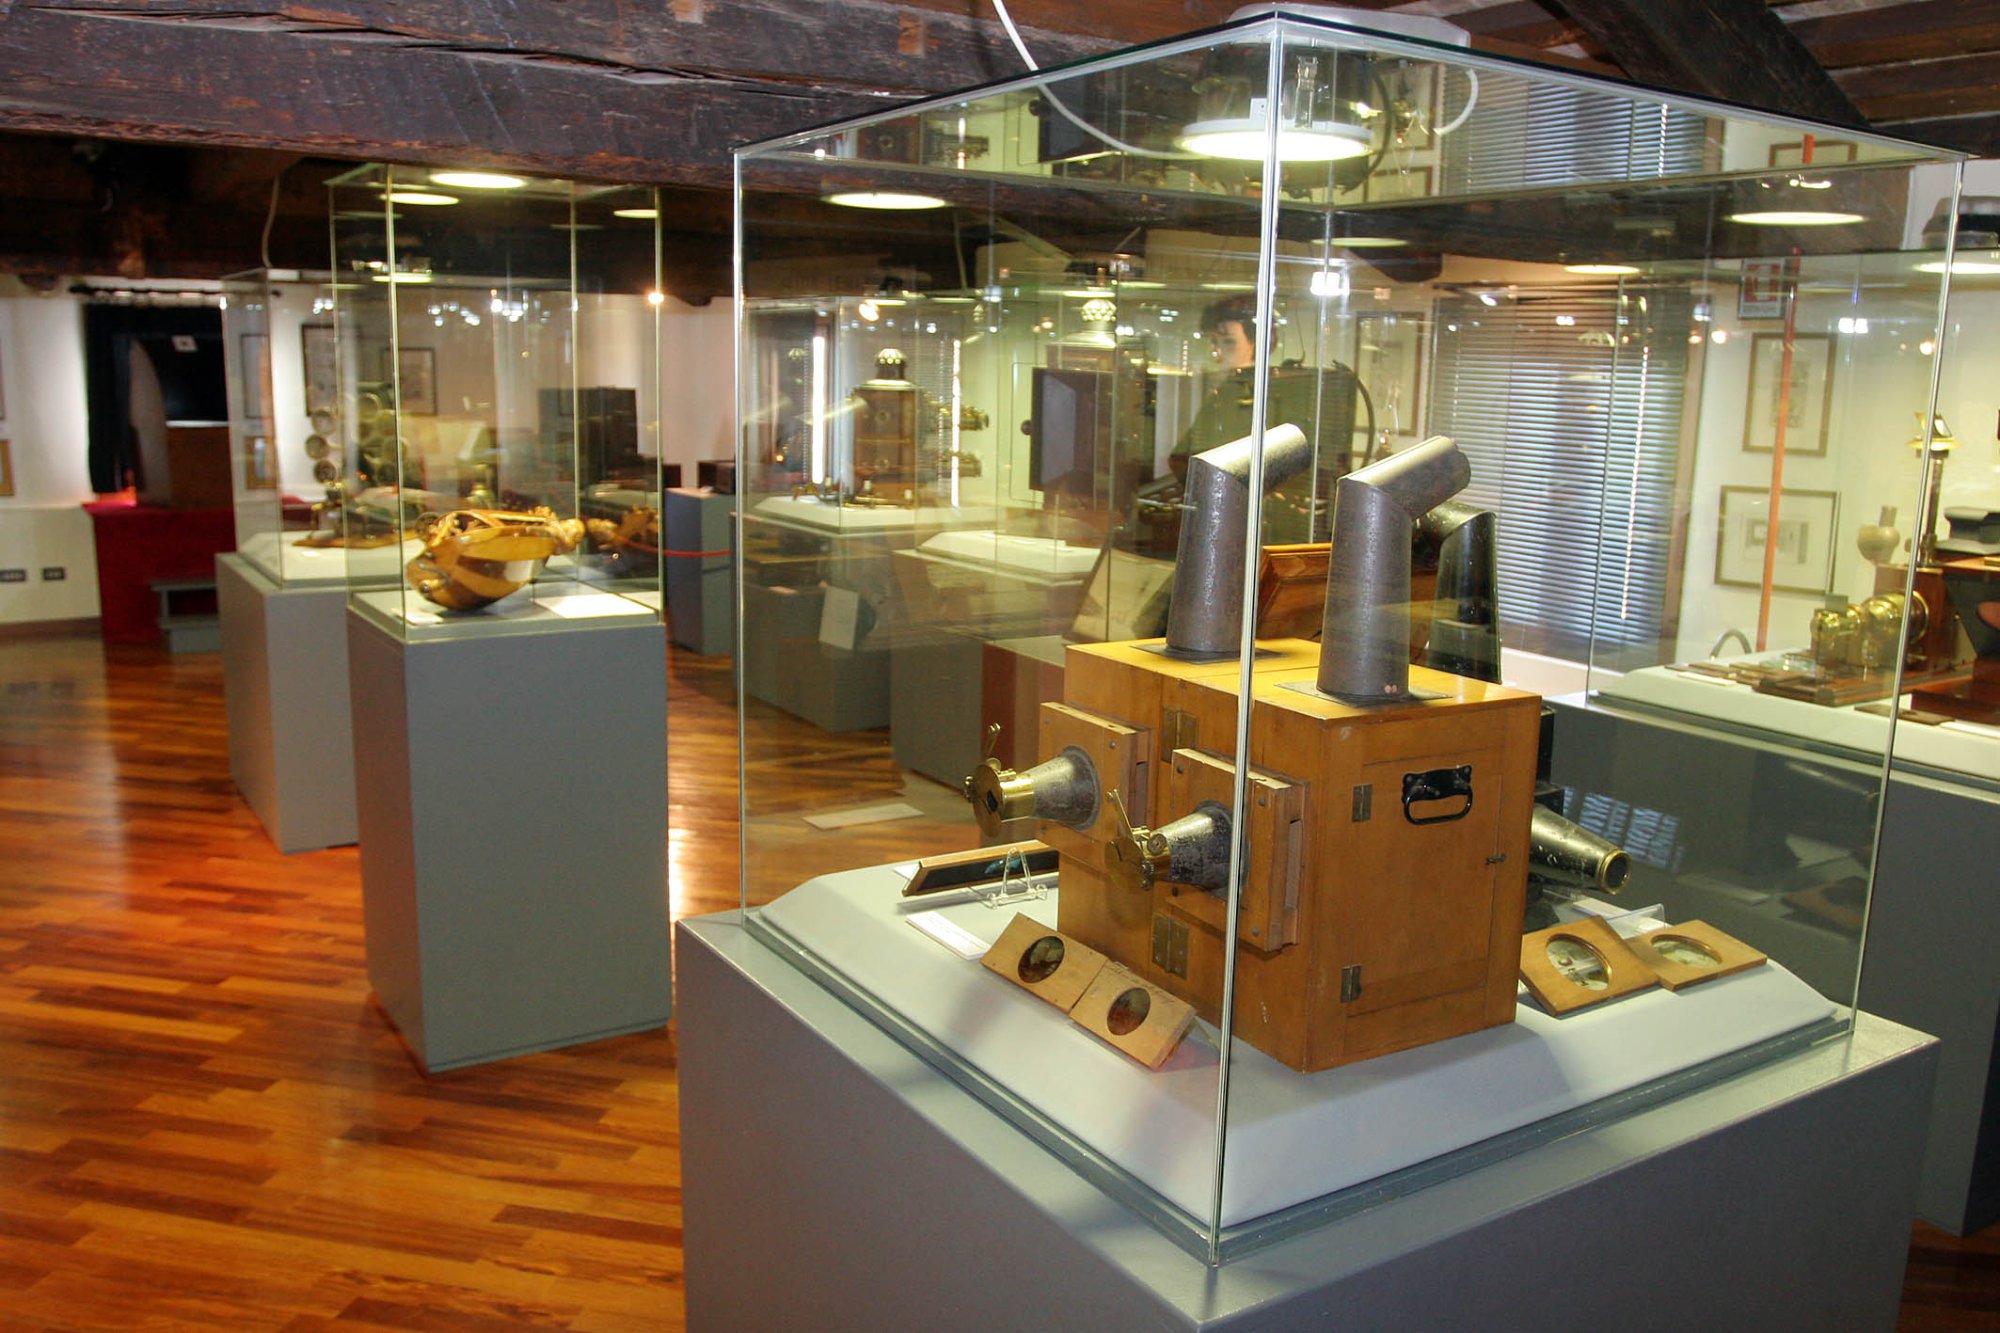 Museo del Precinema